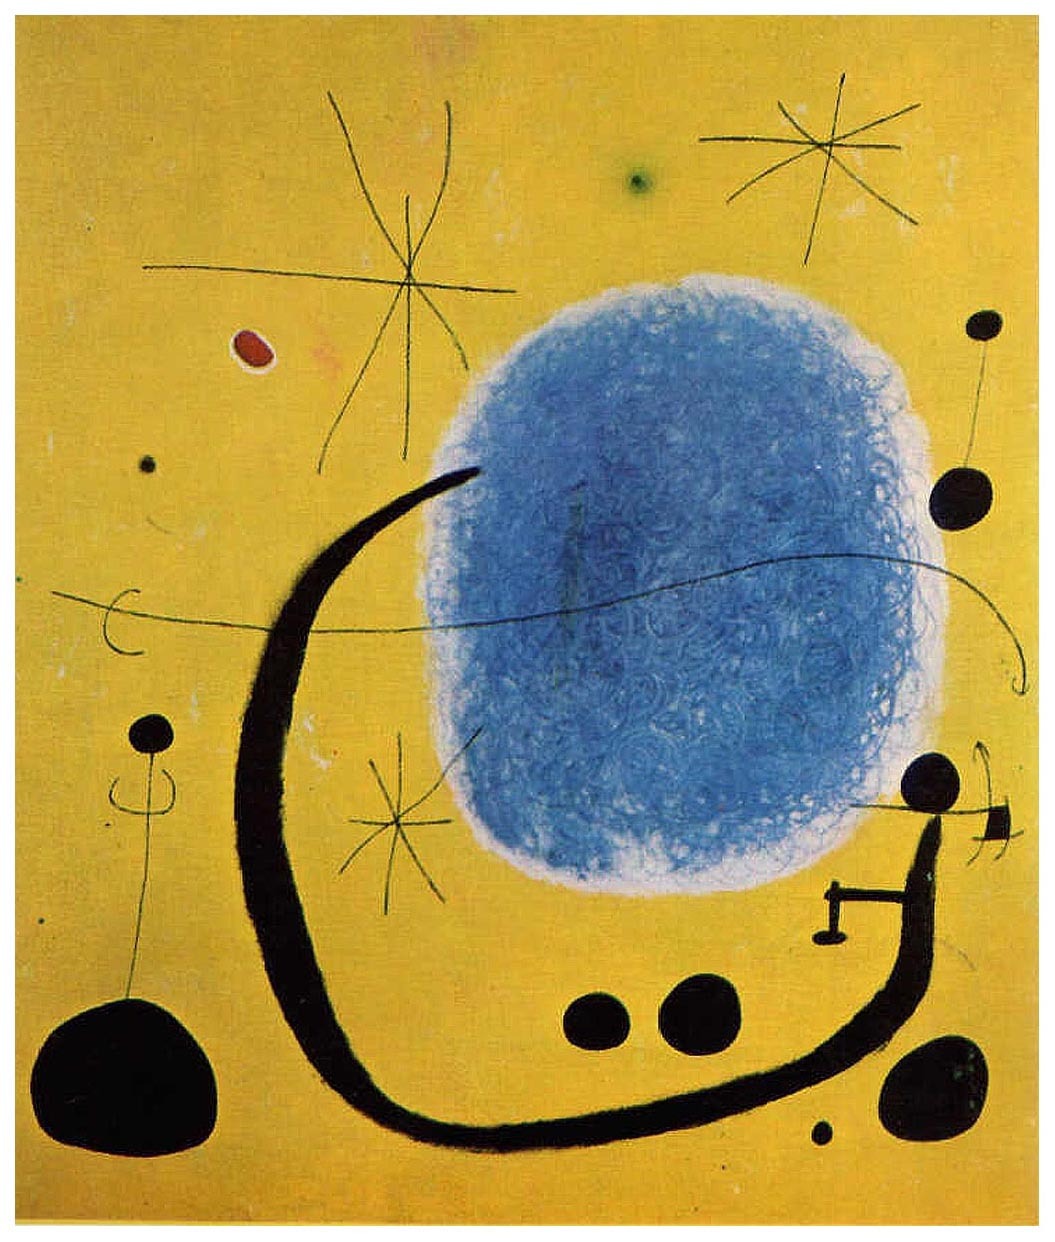 artist-miro:
â€œ The Gold of the Azure, Joan Miro
Medium: oil,canvas
https://www.wikiart.org/en/joan-miro/the-gold-of-the-azure
â€